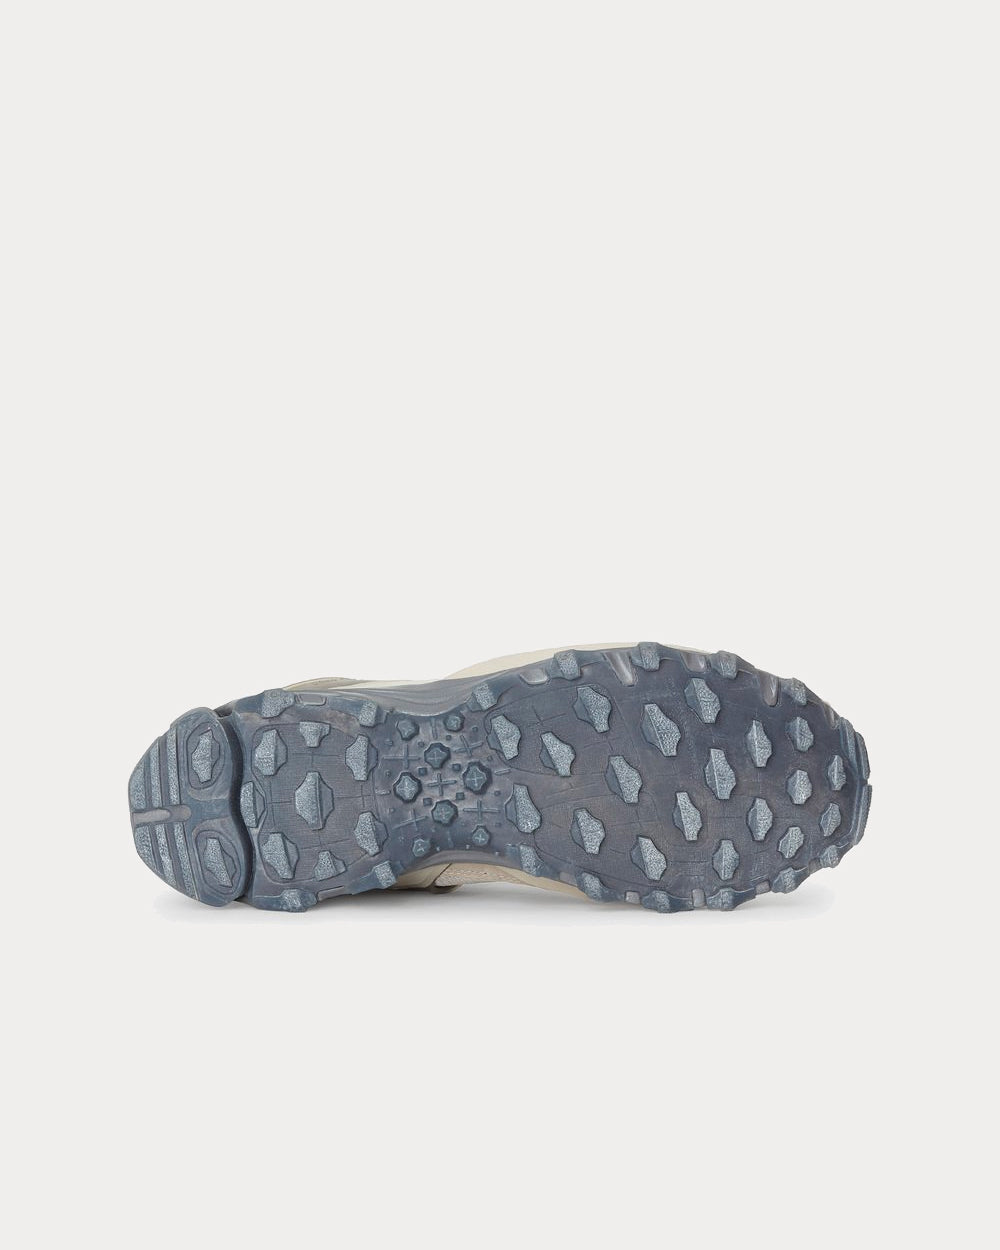 Adidas x OAMC - TYPE O-5 Light Grey Low Top Sneakers